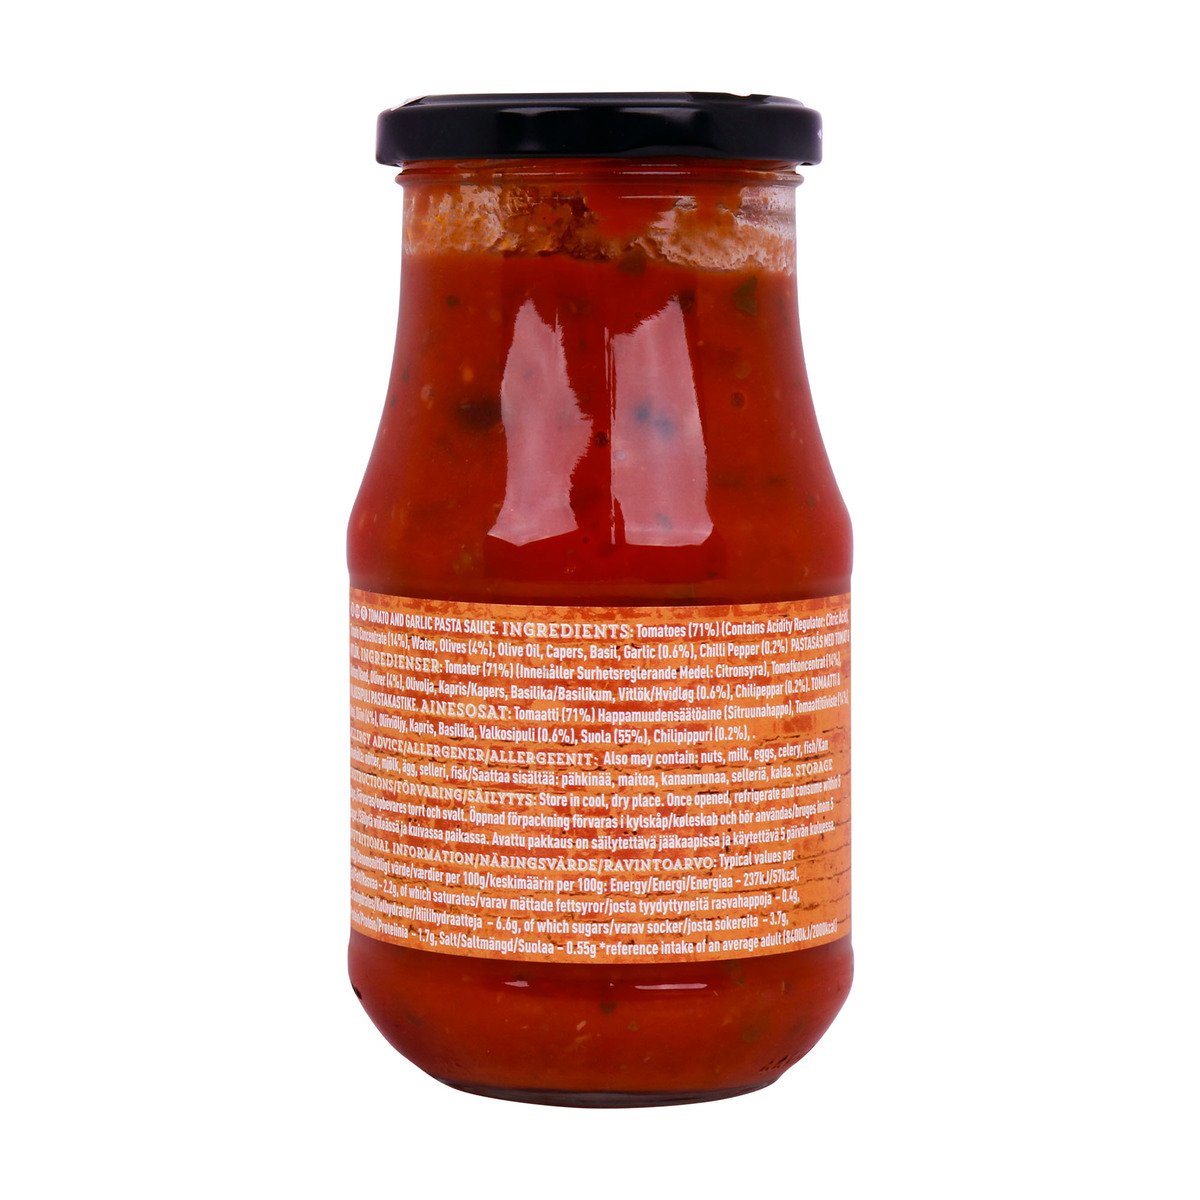 Jamie Oliver Tomato And Garlic Pasta Sauce 400 g